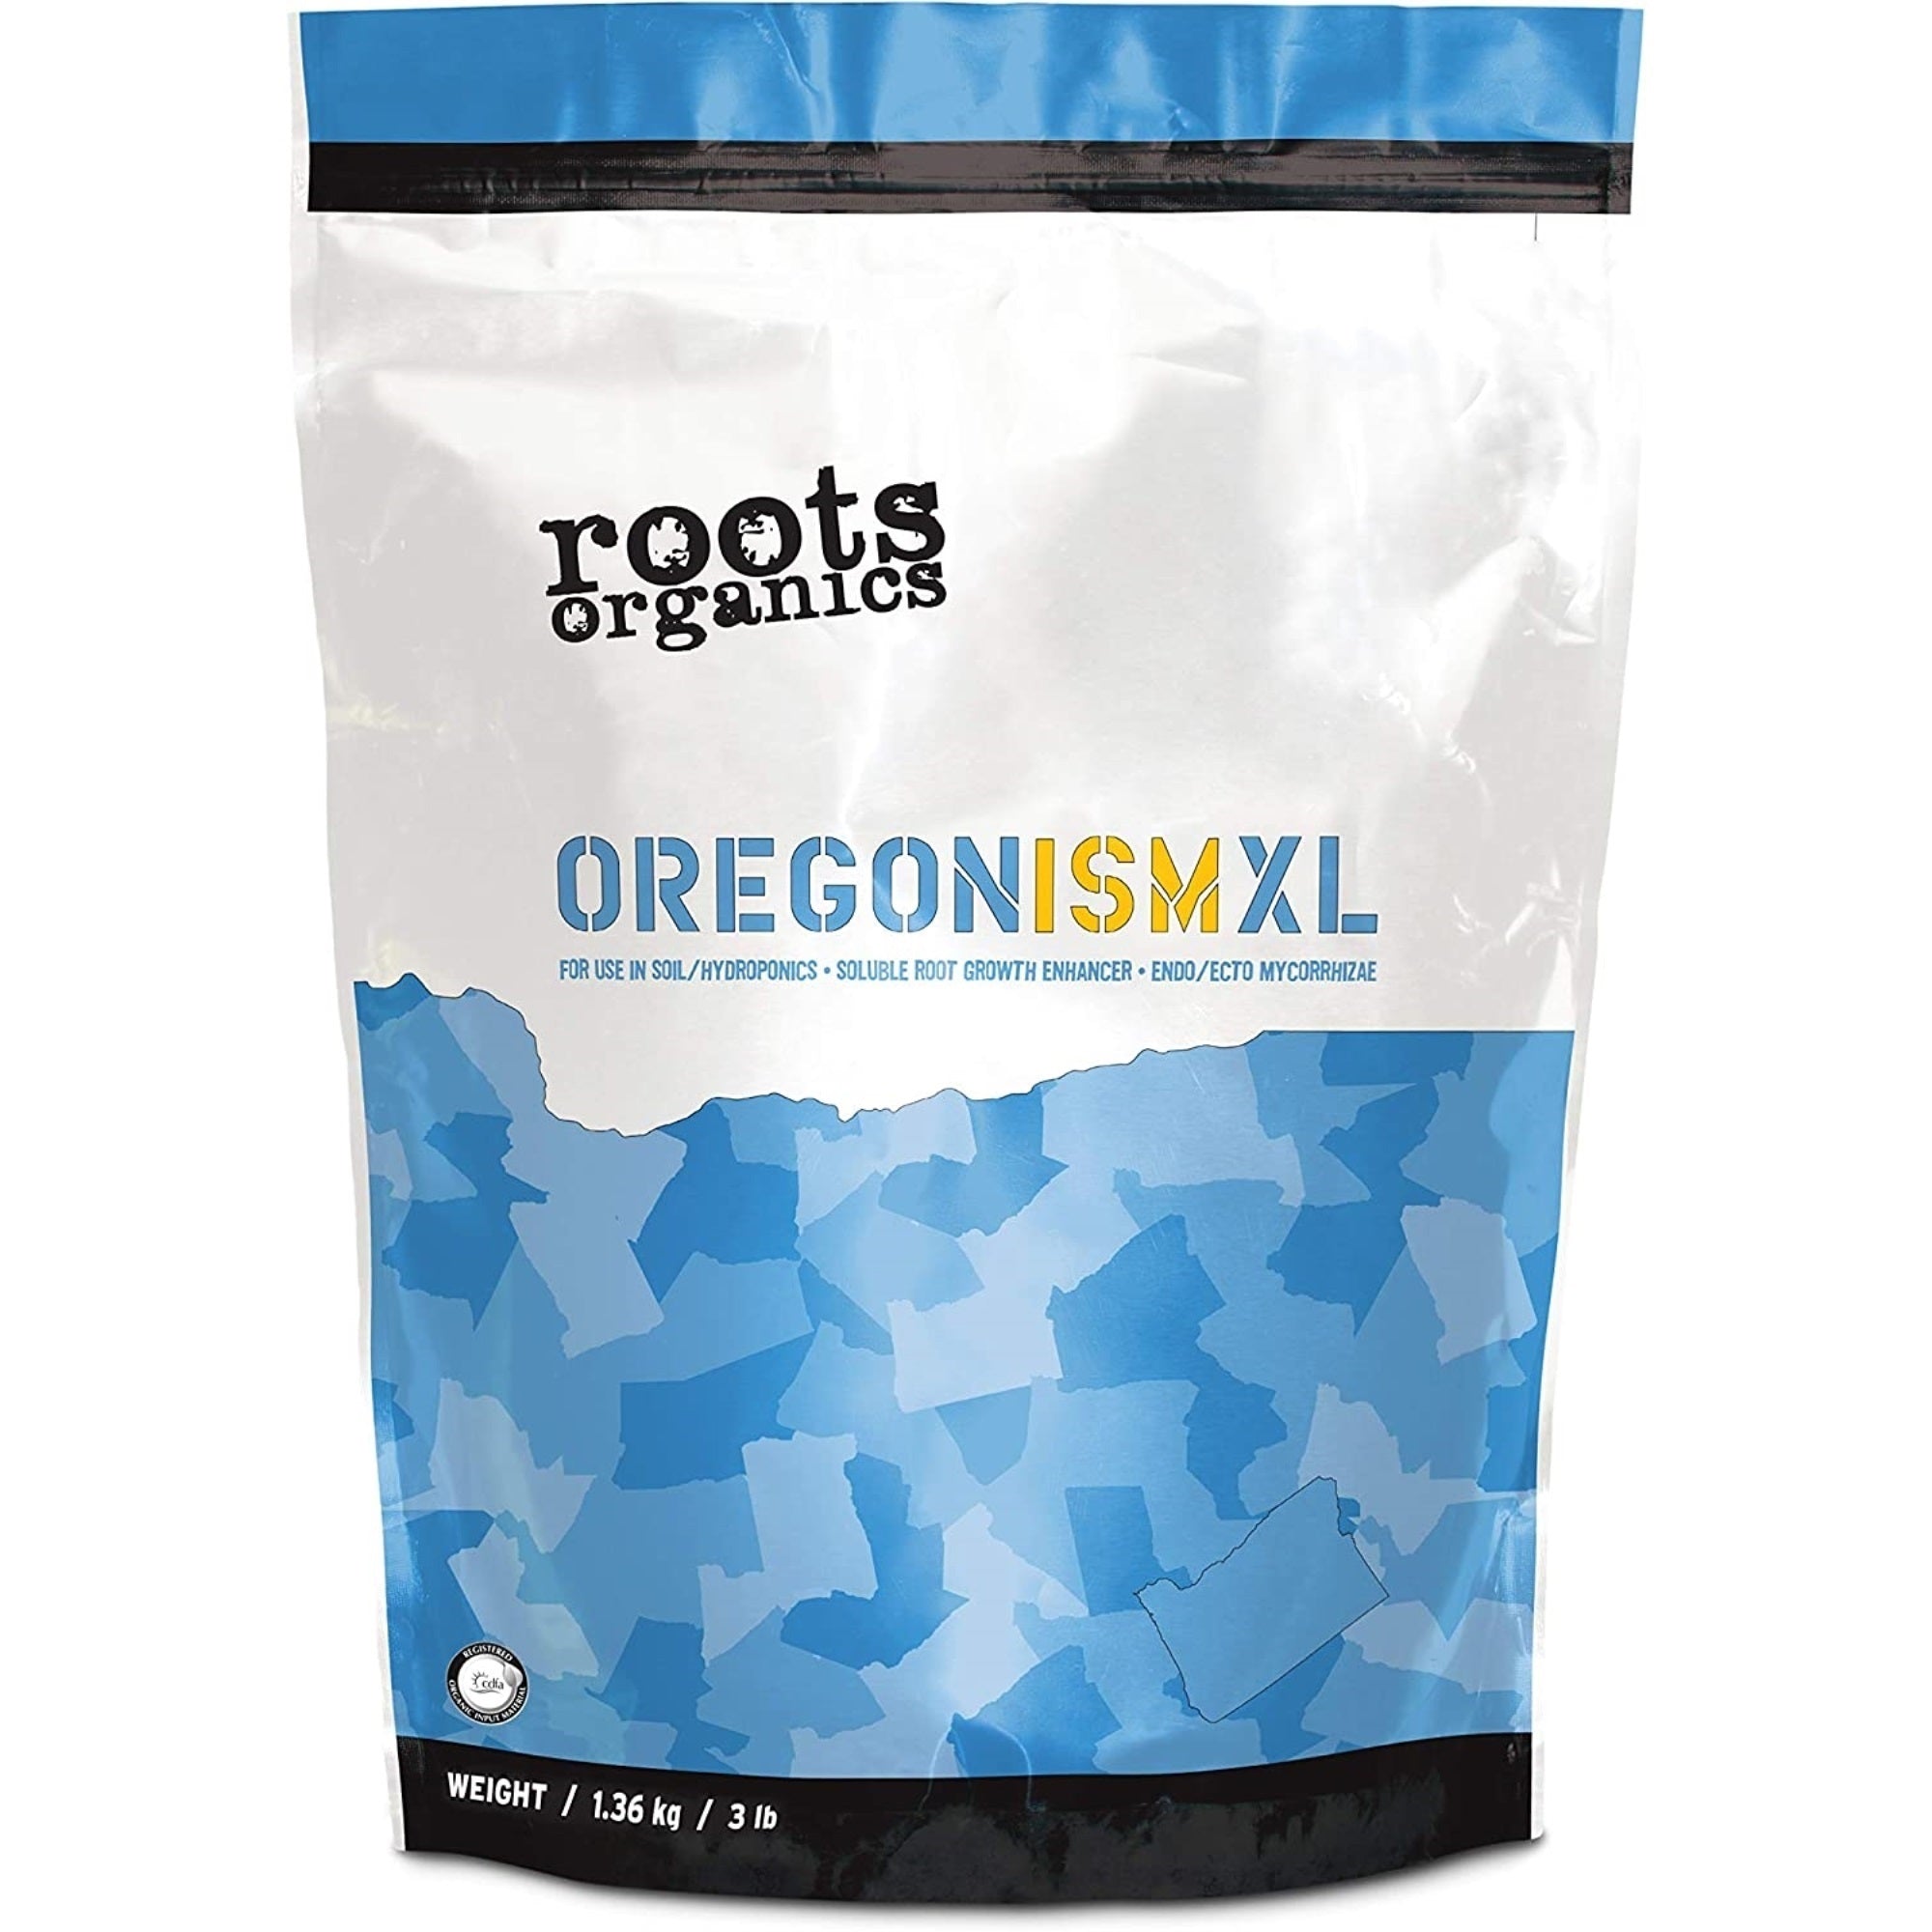 Roots Organics Oregonism XL Soluble Root Growth Enhancer Soil/Hydroponics, 3 lbs